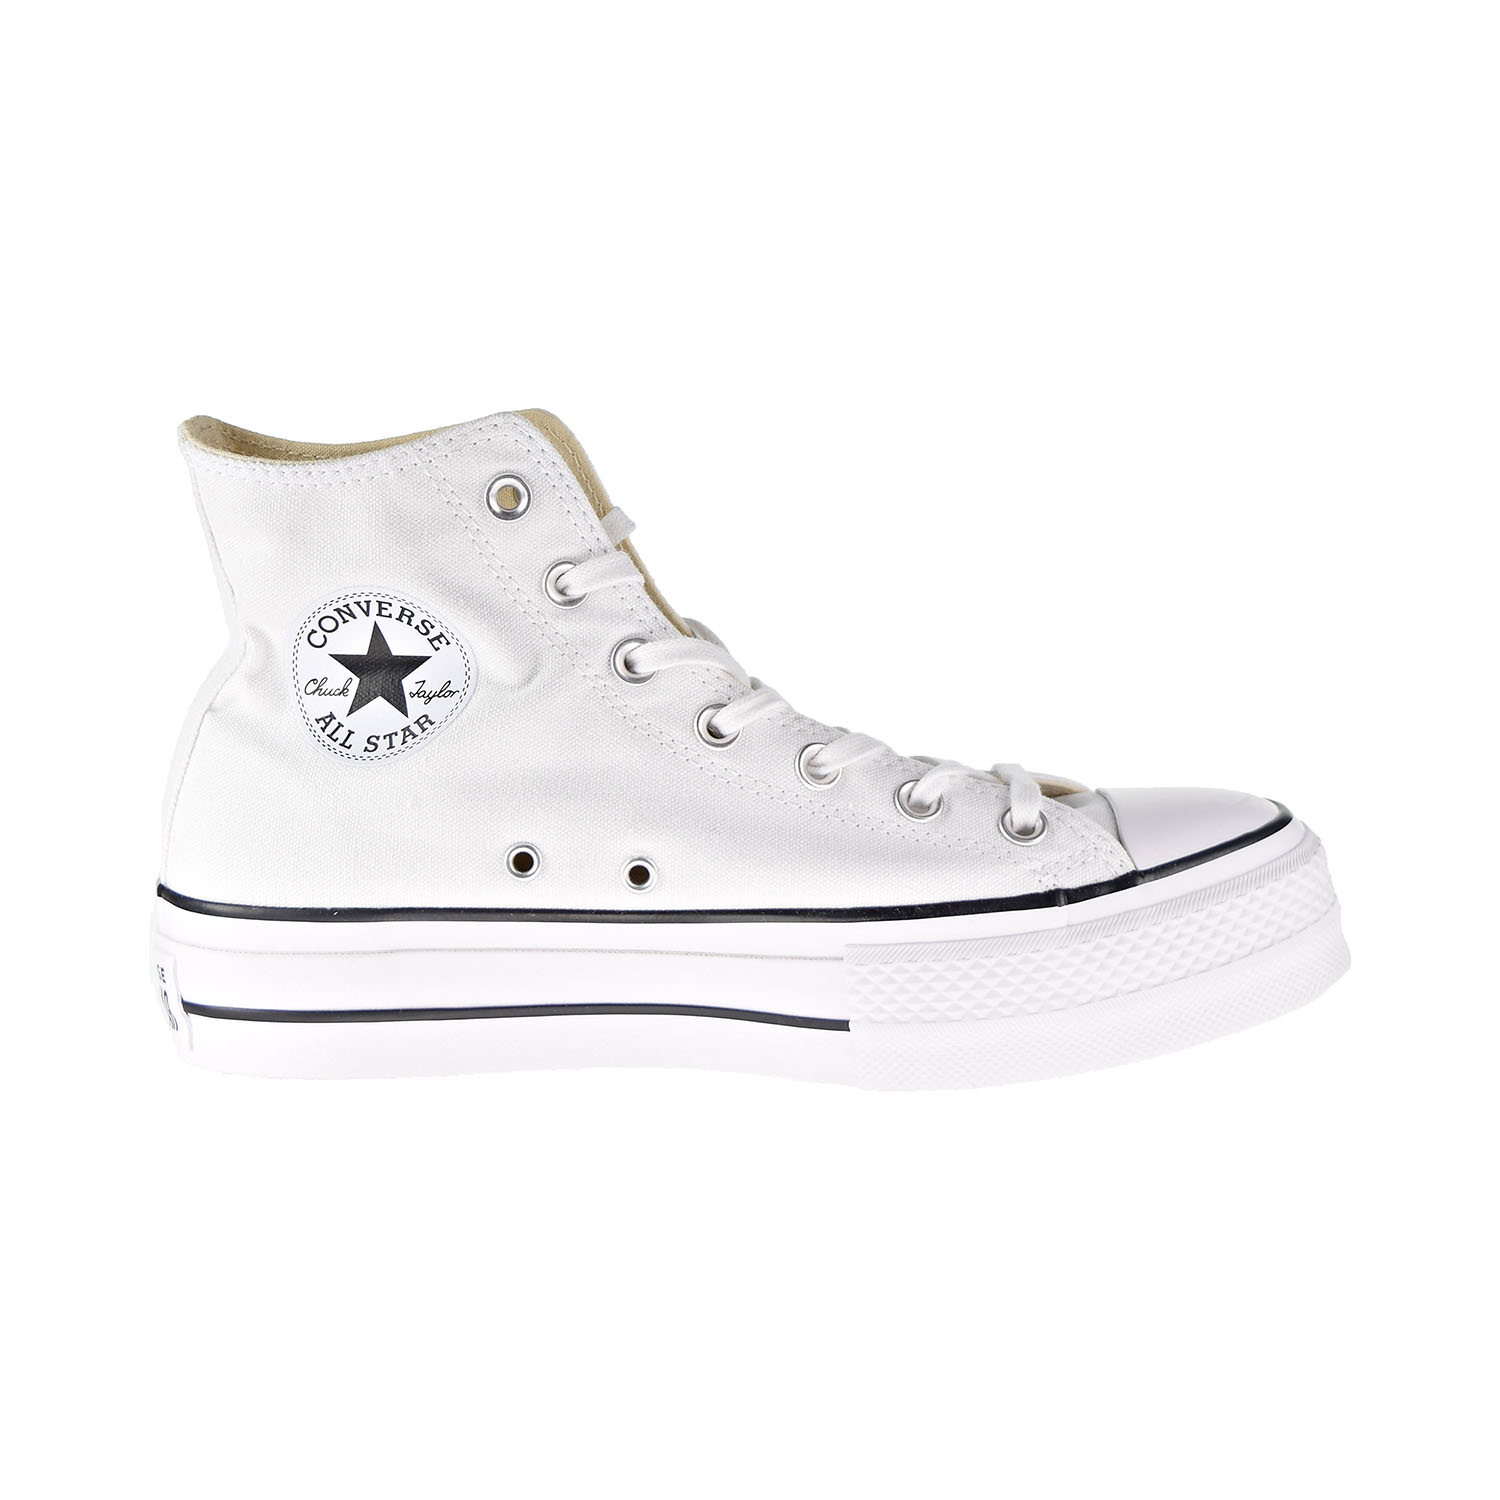 Converse Chuck Taylor All Star Canvas Platform High Top Women's Shoes White 560846c